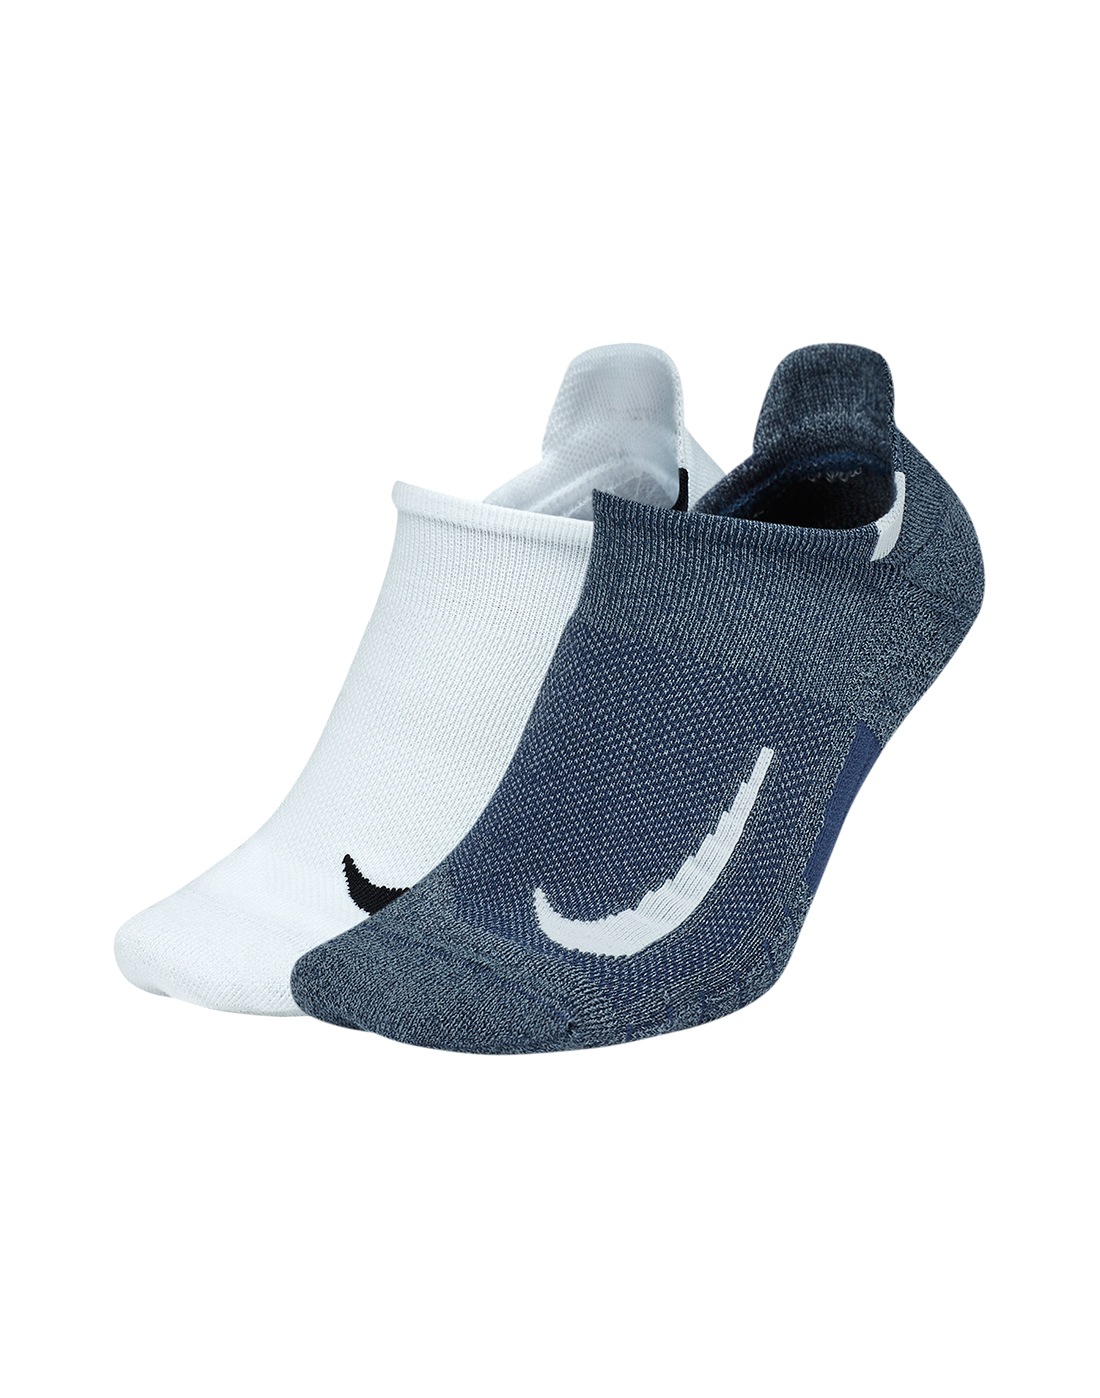 Nike Multiplier Running Socks - Assorted | Life Style Sports IE